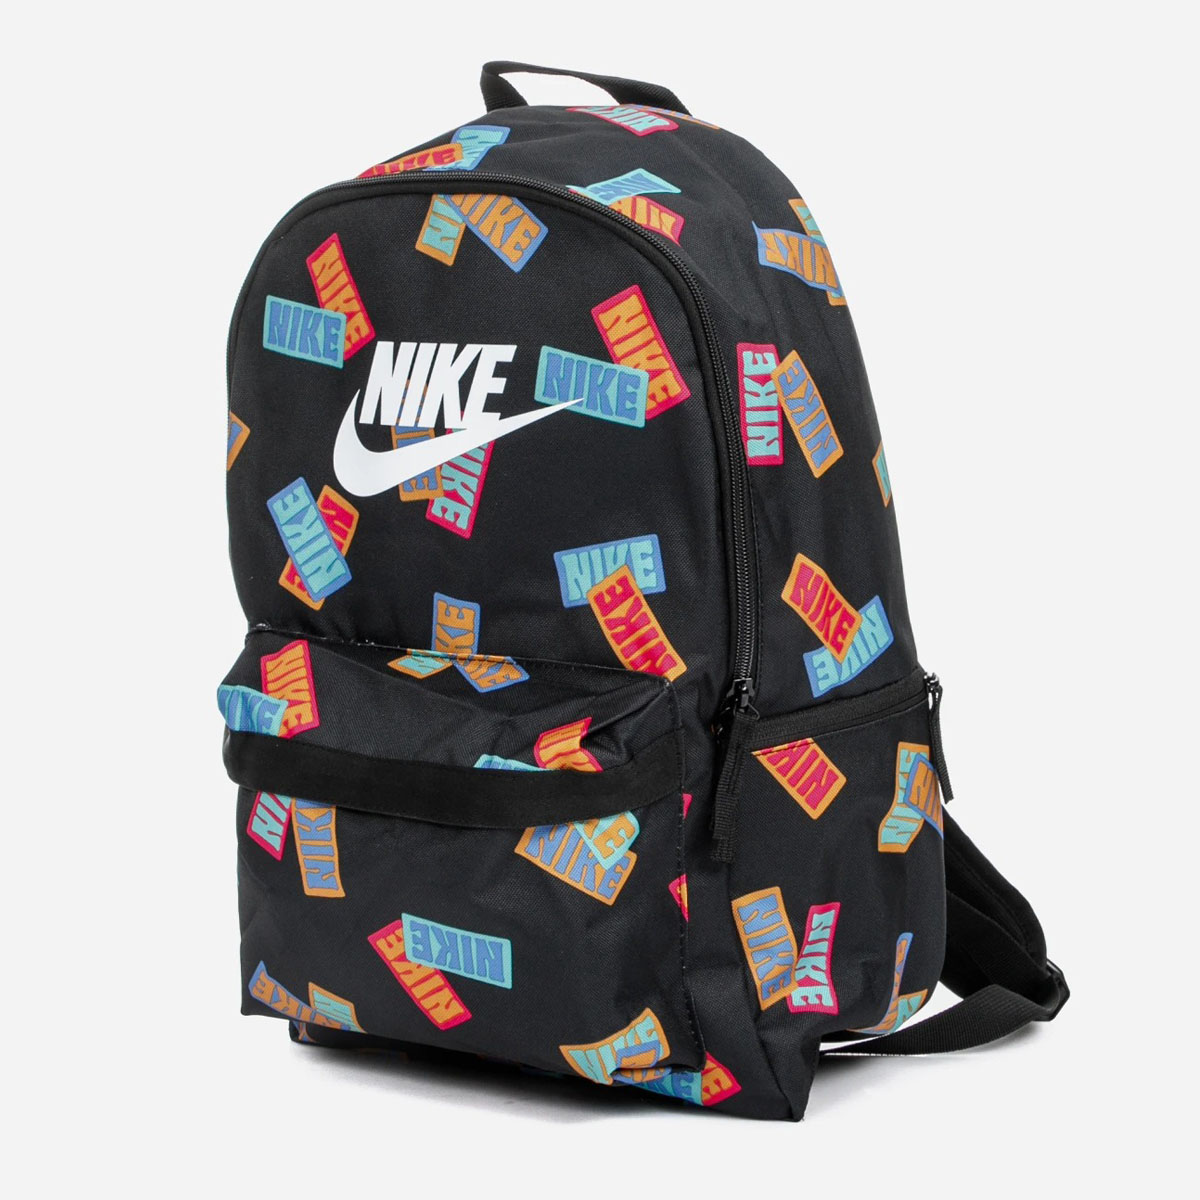 Balo Nike Heritage Backpack DM2159-010 Màu Đen